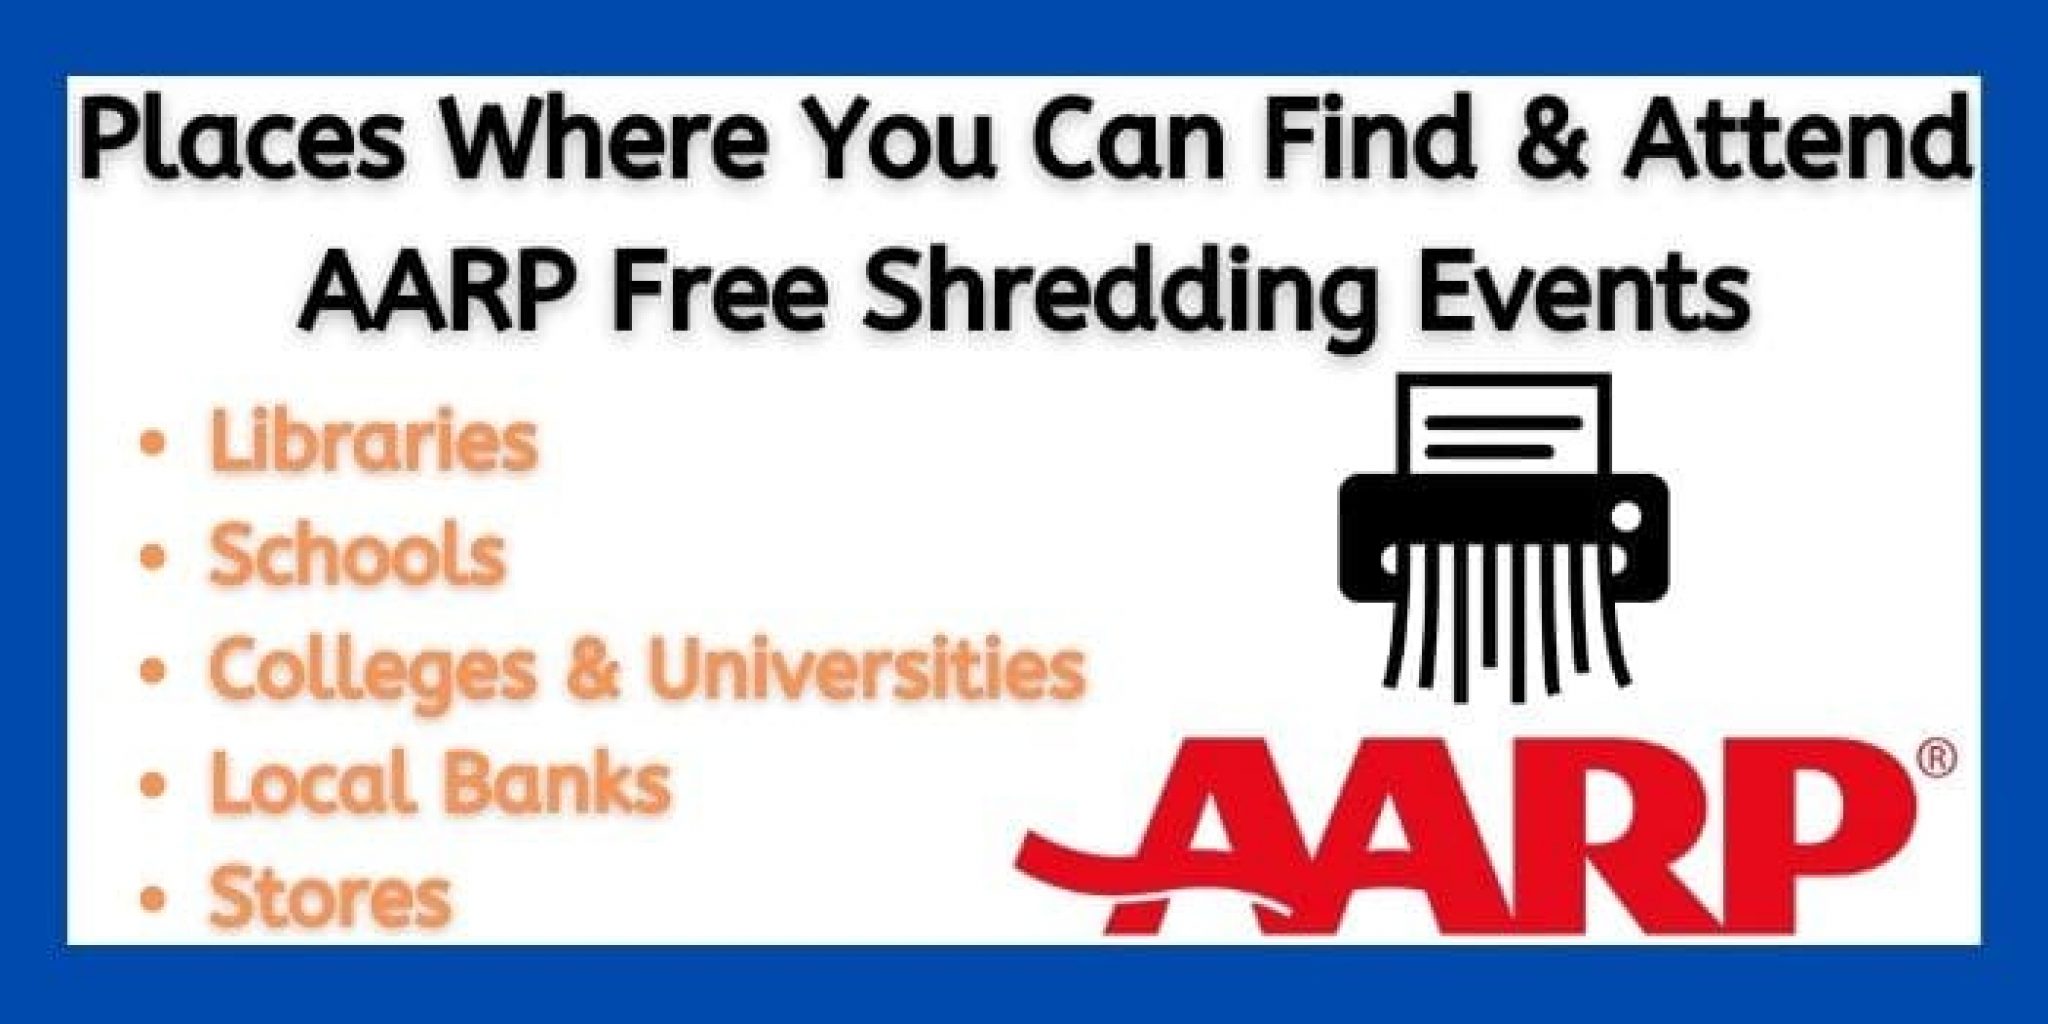 AARP Free Shredding Events Near Me November 2023